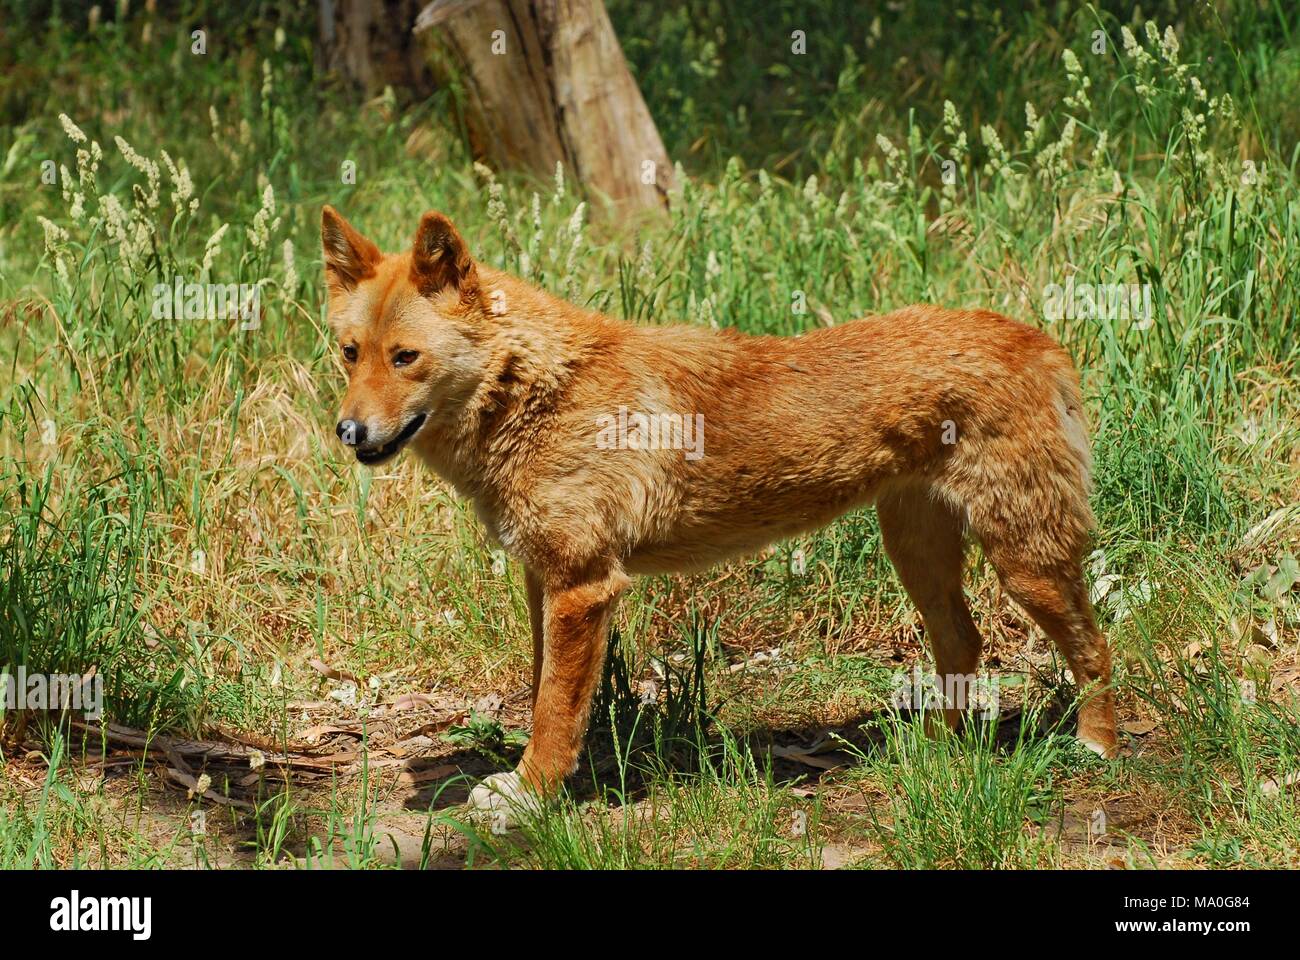 Doelwit Heerlijk Drank The dingo (Canis lupus dingo or Canis dingo) is a type of feral dog native  to Australia Stock Photo - Alamy